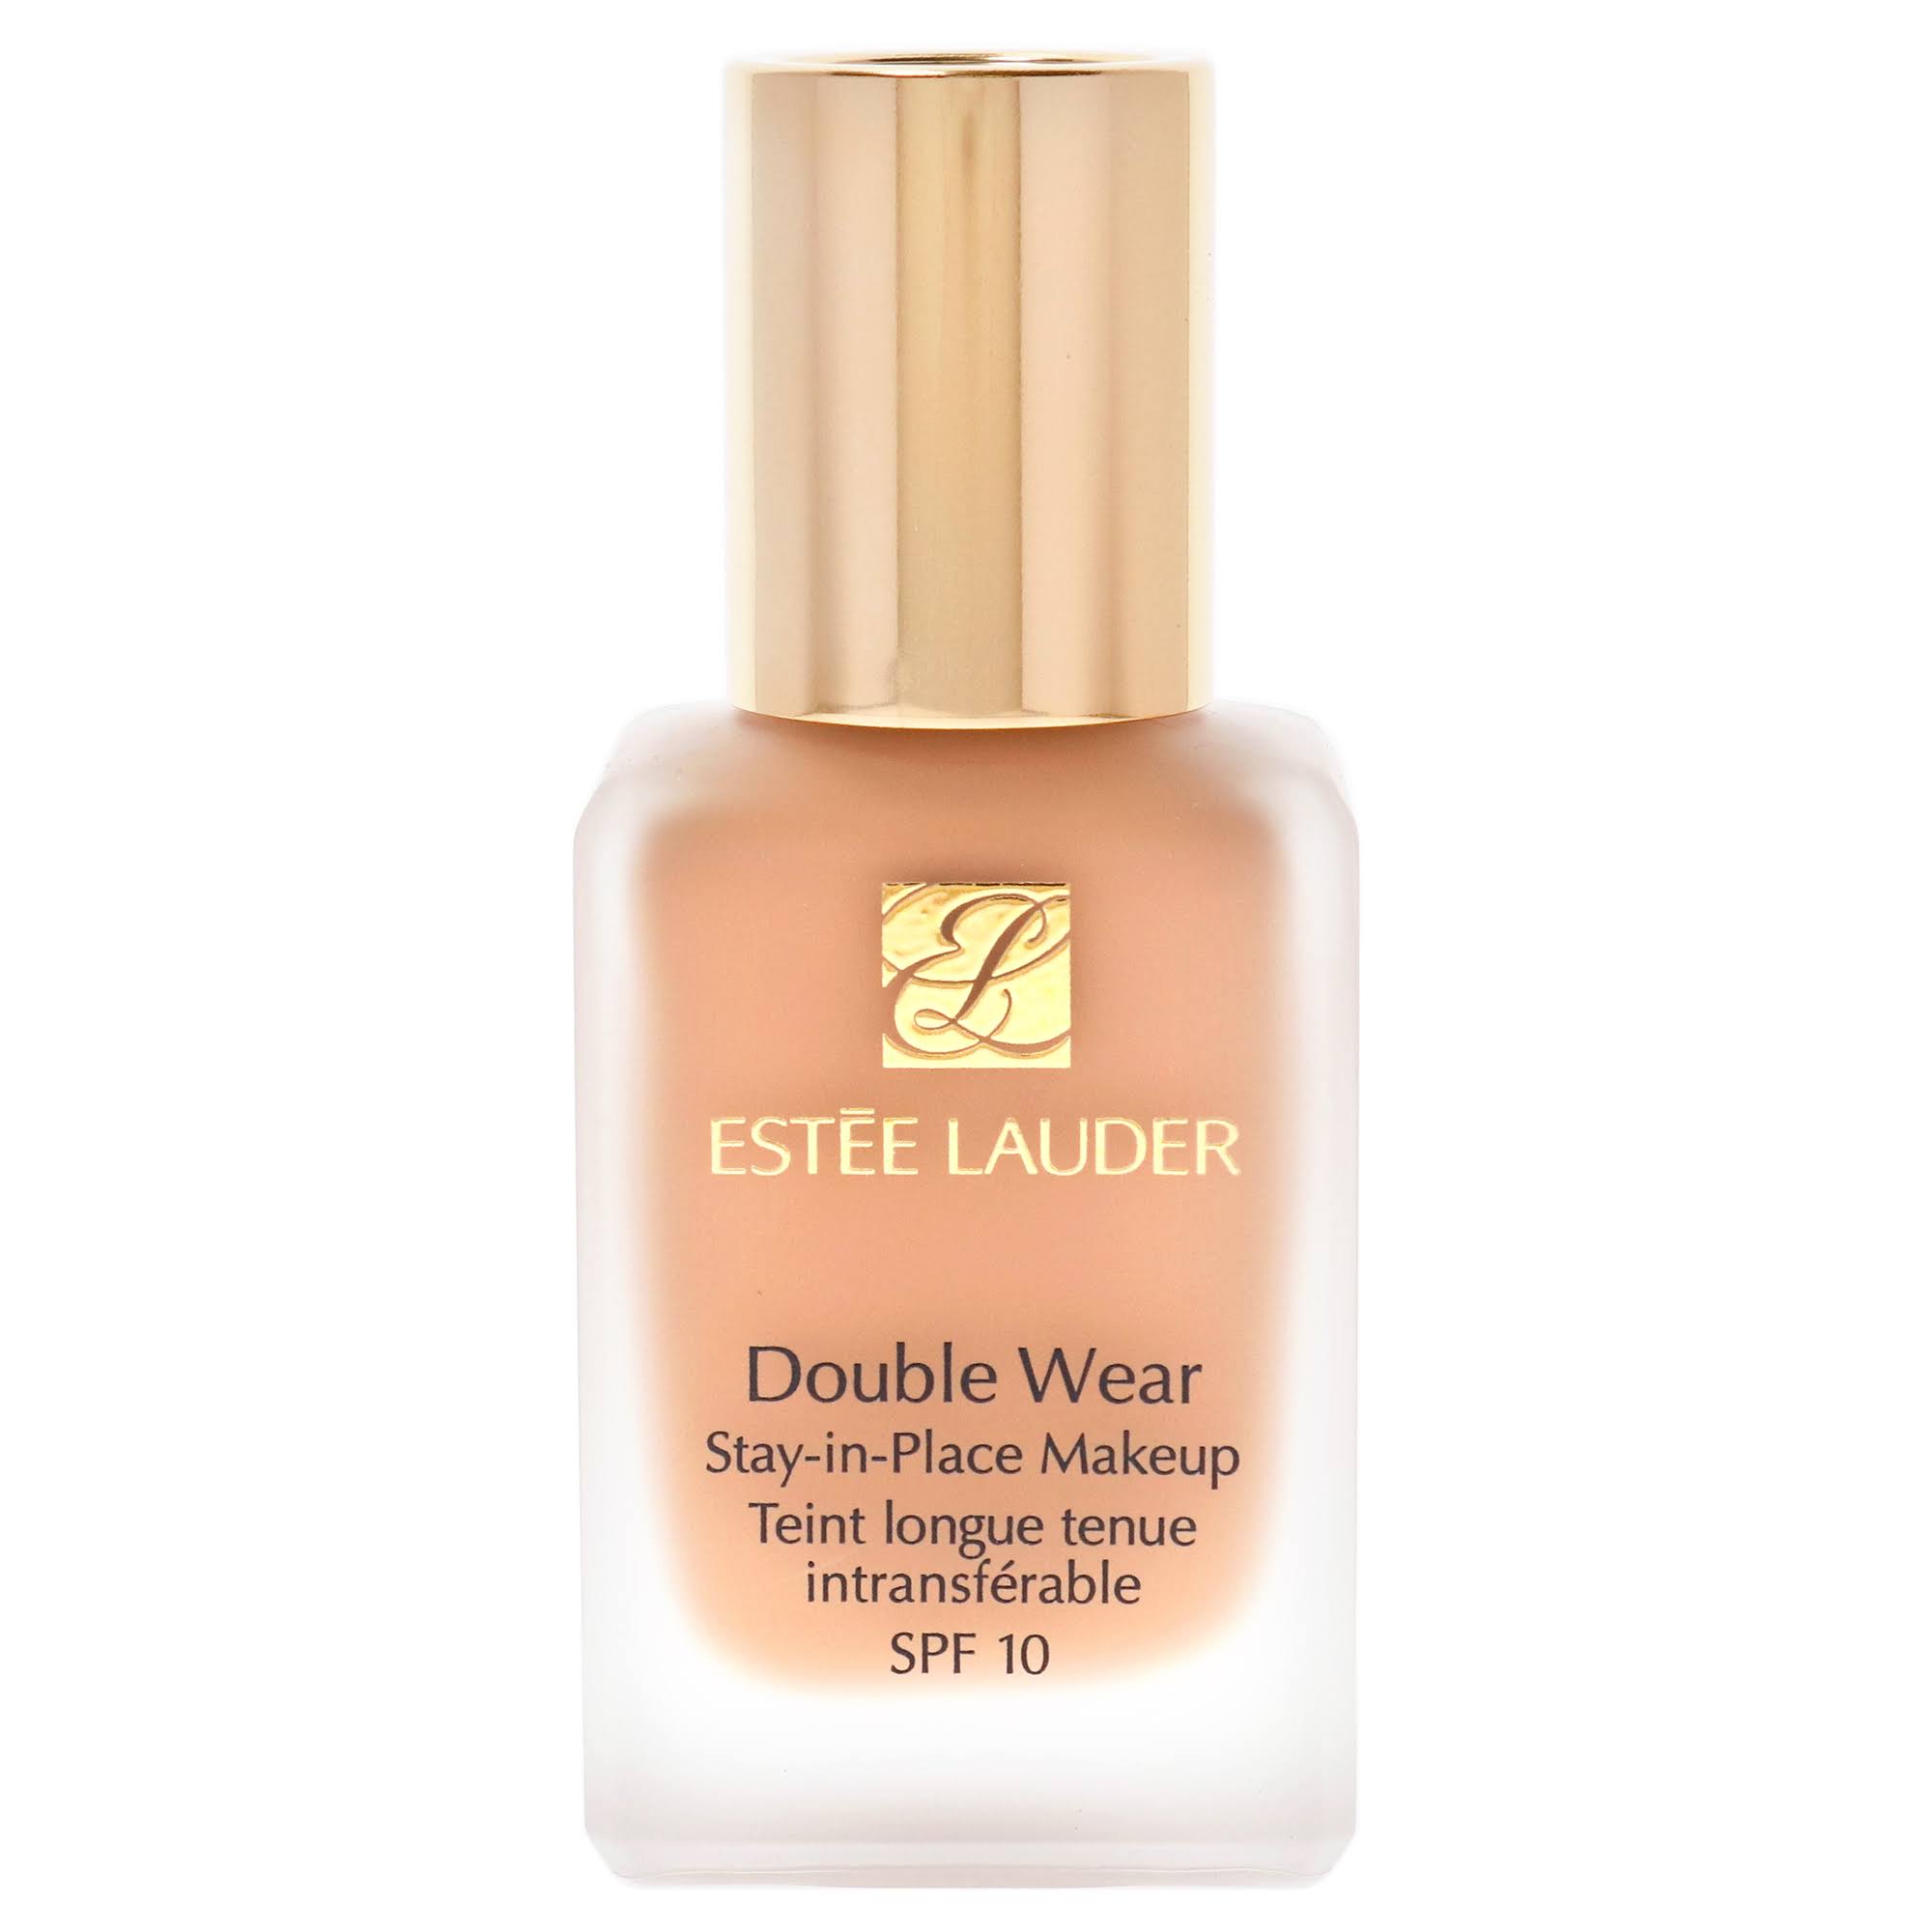 Estee Lauder Double Wear Stay-in-Place Makeup - SPF10, Ivory Beige